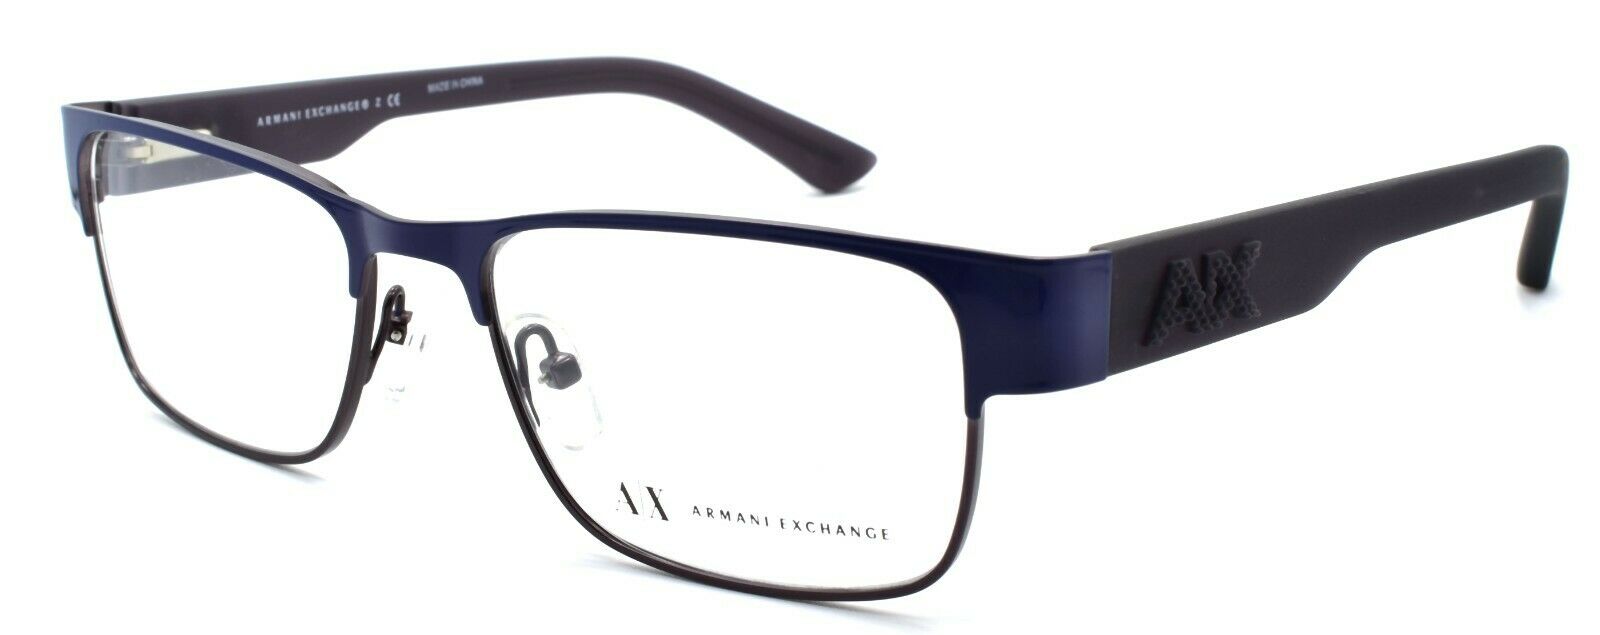 1-Armani Exchange AX1012 6046 Men's Glasses Frames 51-17-140 Blue / Gunmetal-8053672207392-IKSpecs